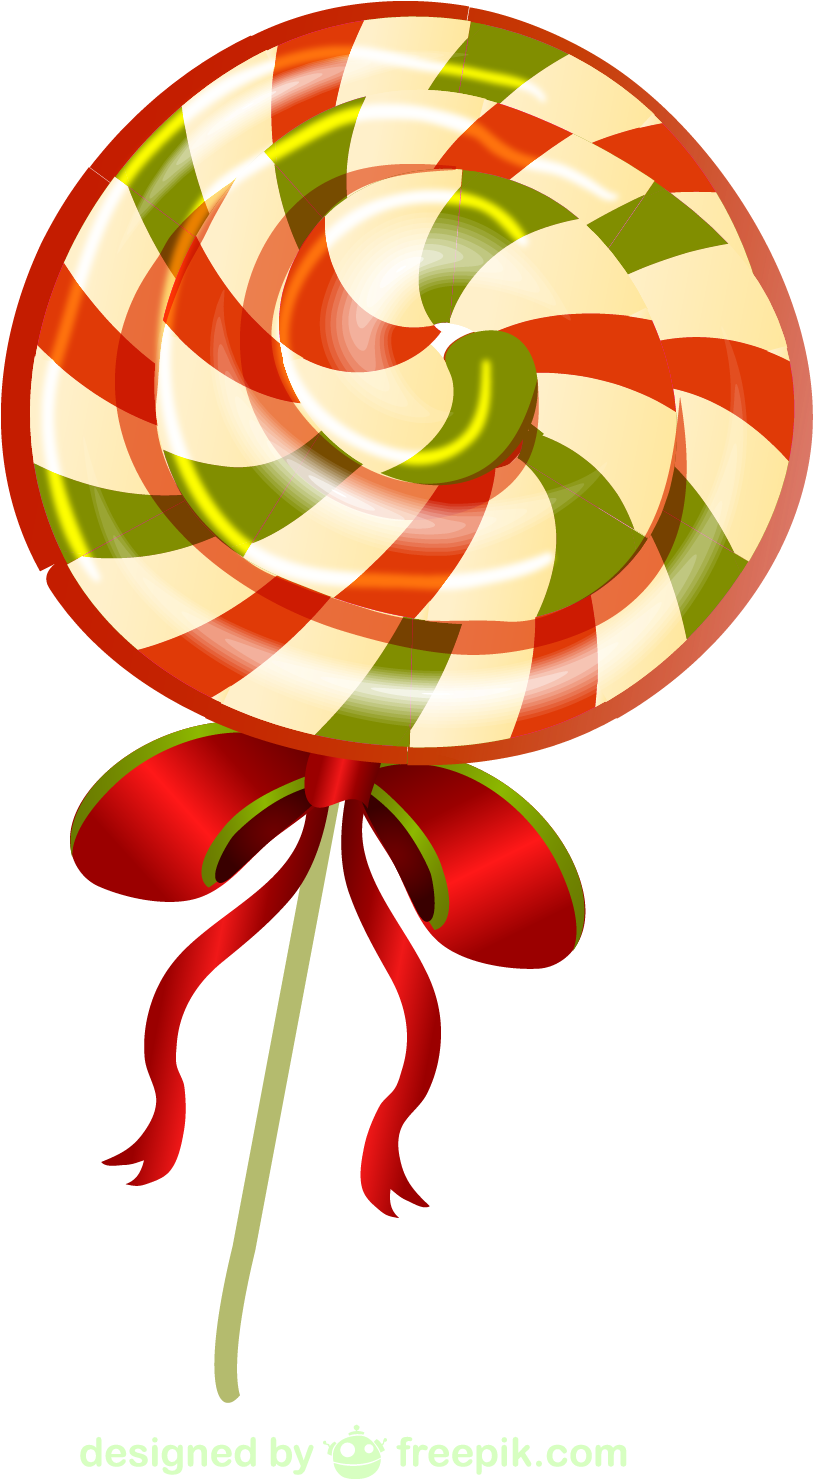 Lollipop Ribbon Candy Candy Cane Christmas - Stick Candy (1667x1667)